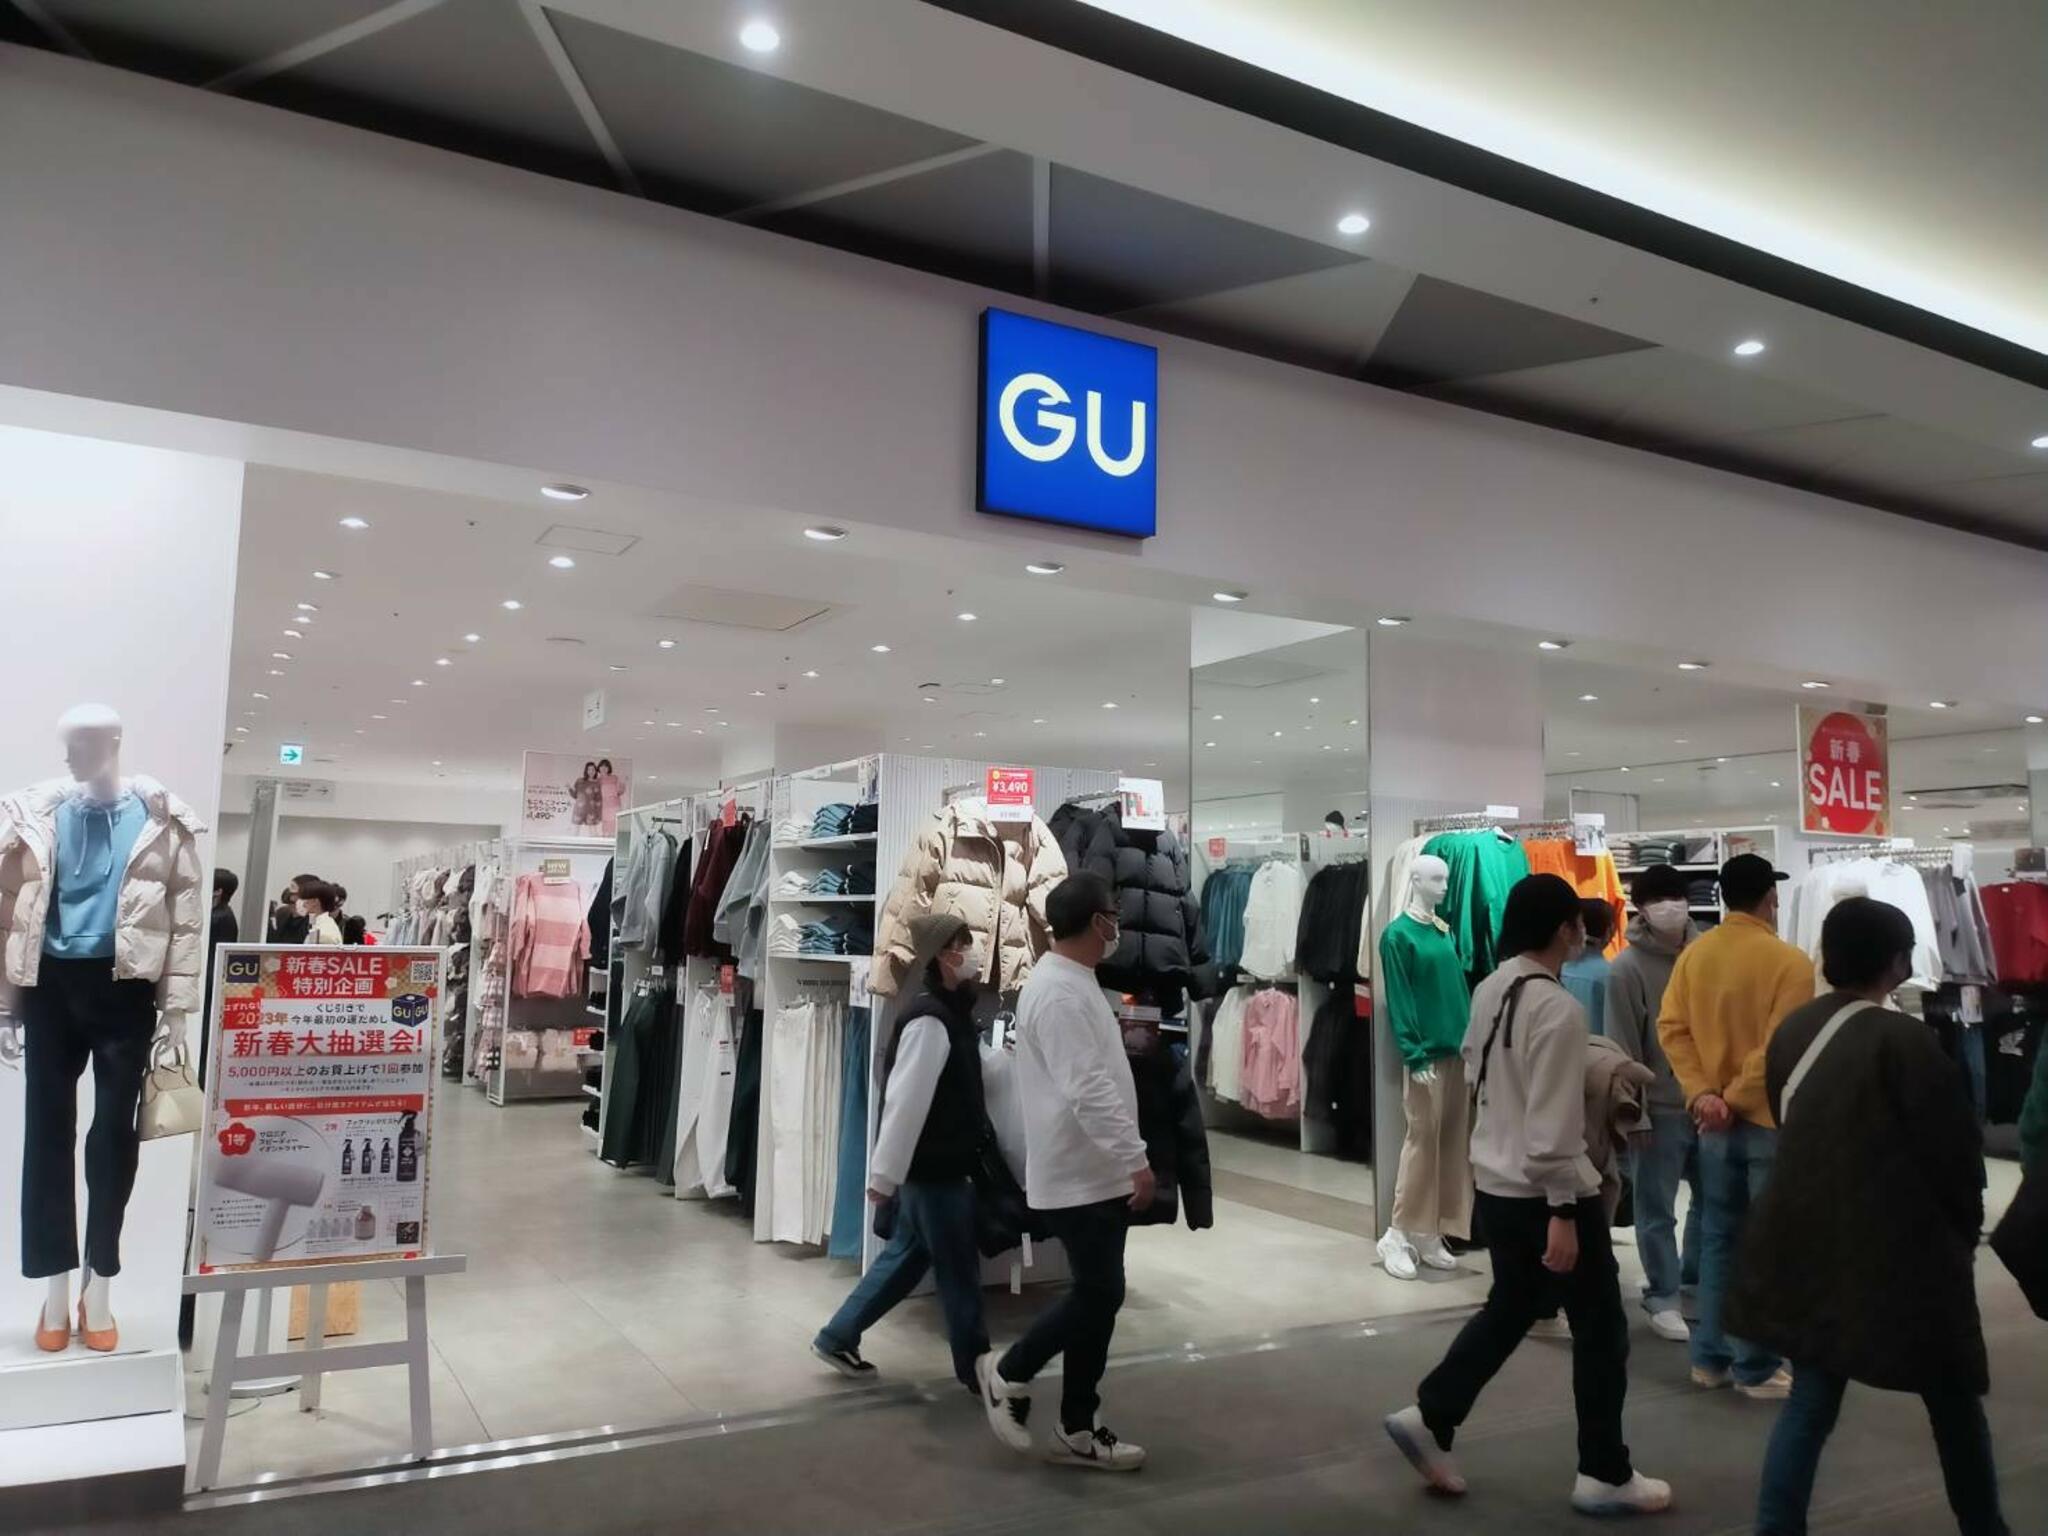 GU イオンモール東浦店の代表写真8